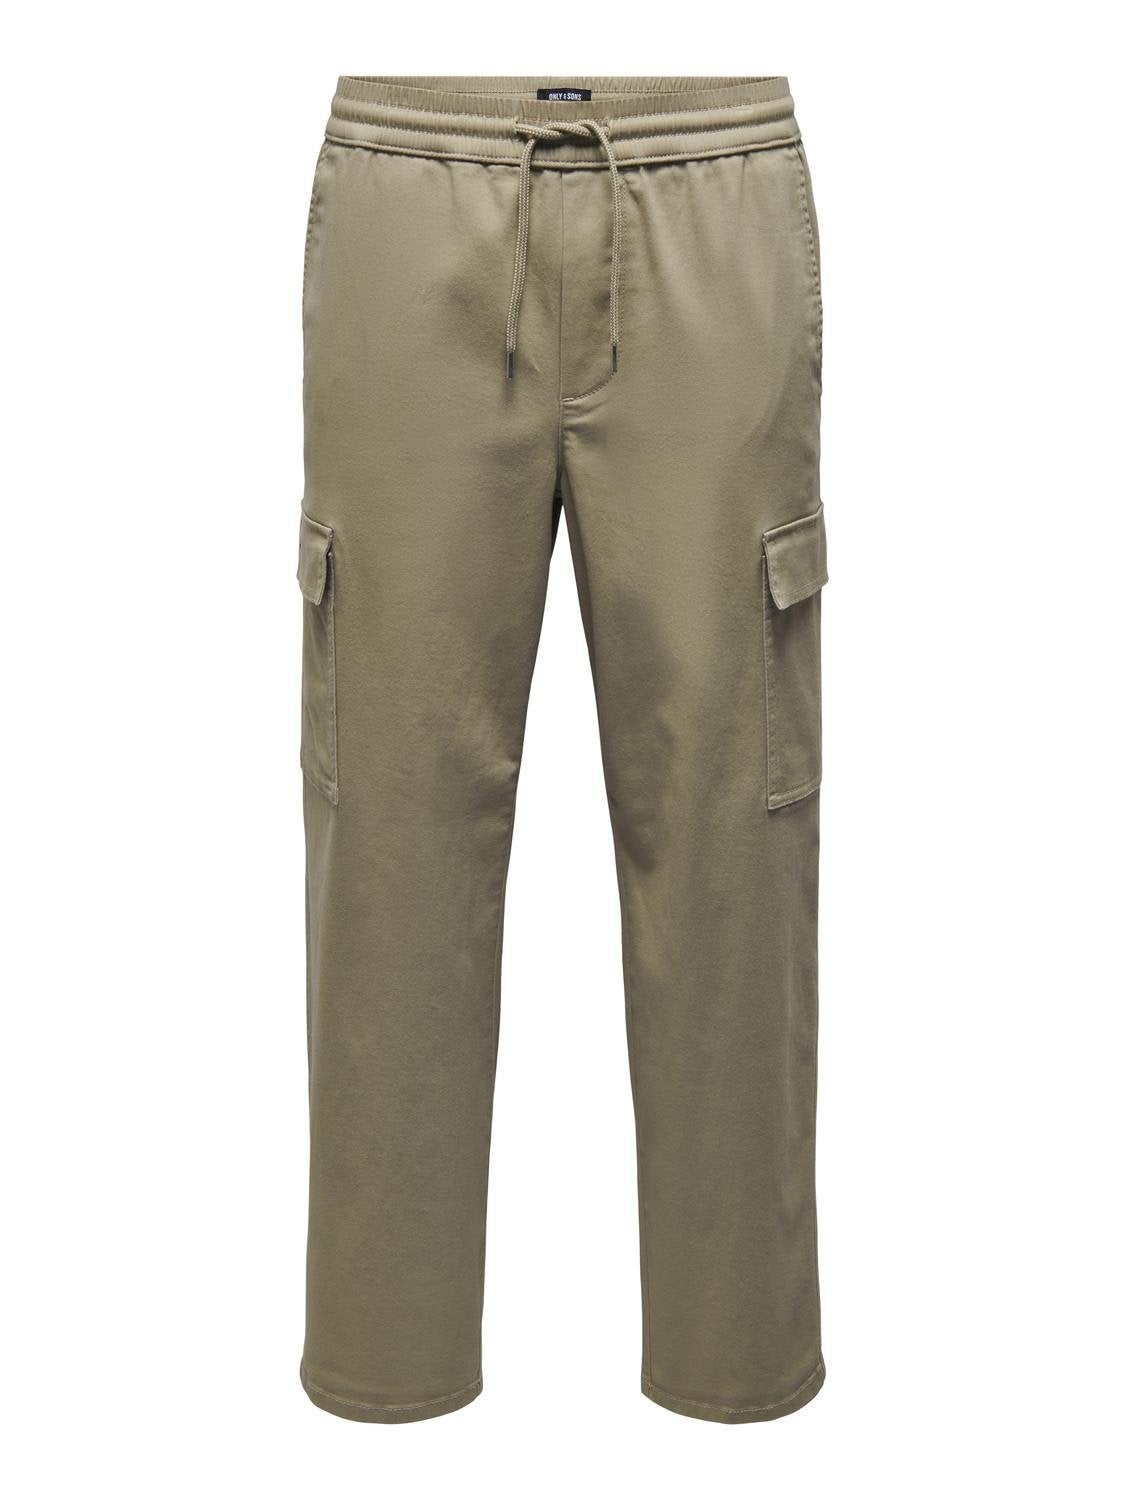 Shop Plain Relaxed Fit Pants Online | Max UAE